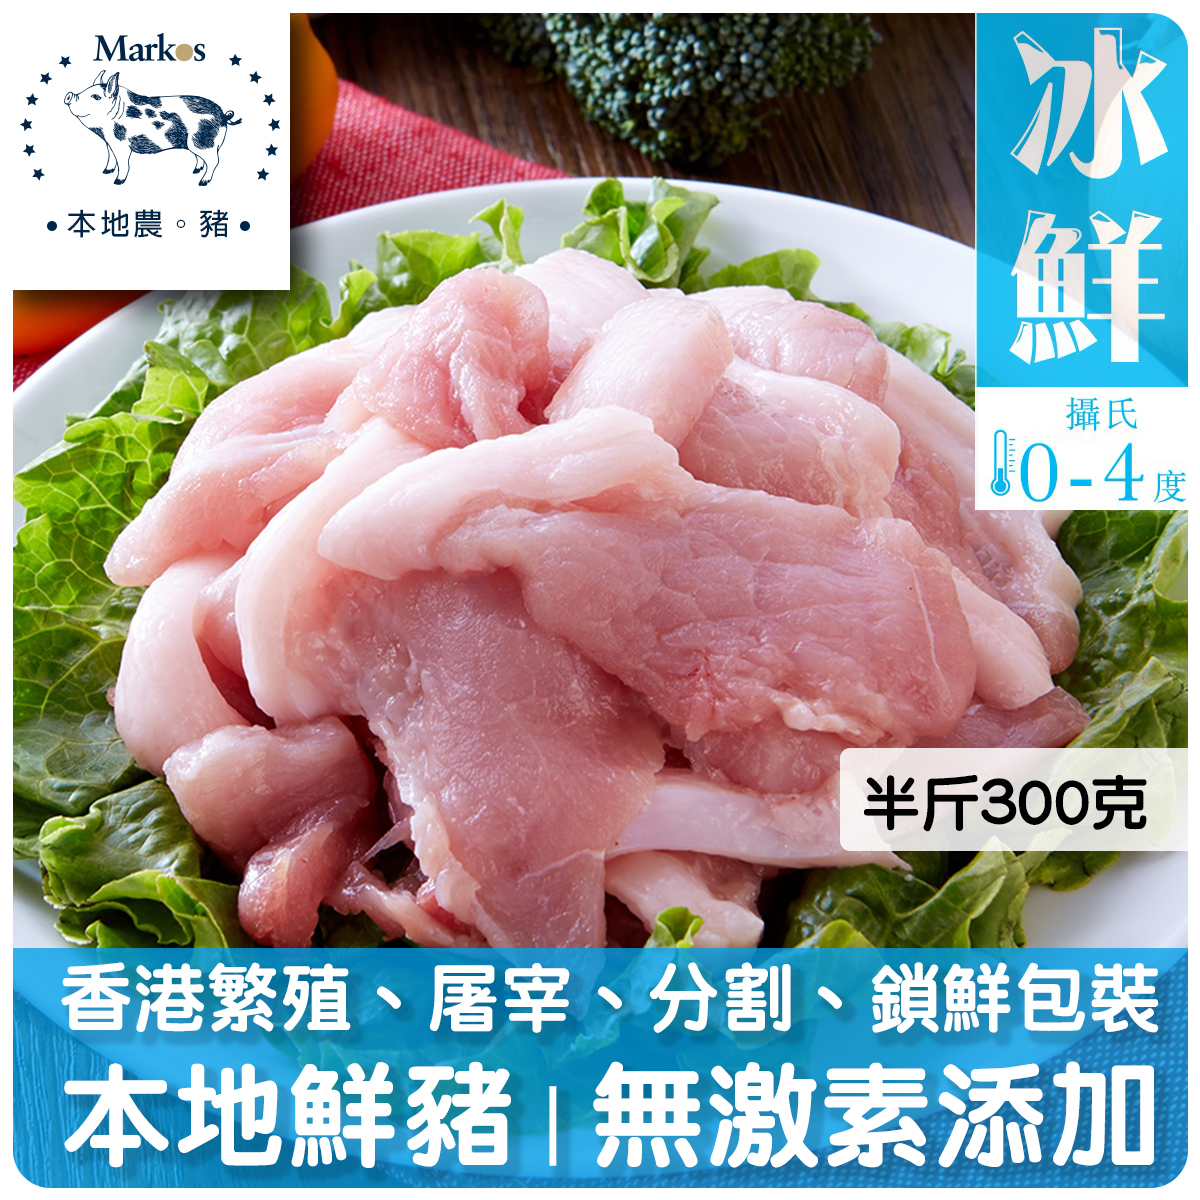 Pan fry sliced pork (Hong Kong Pork 0-4°C)